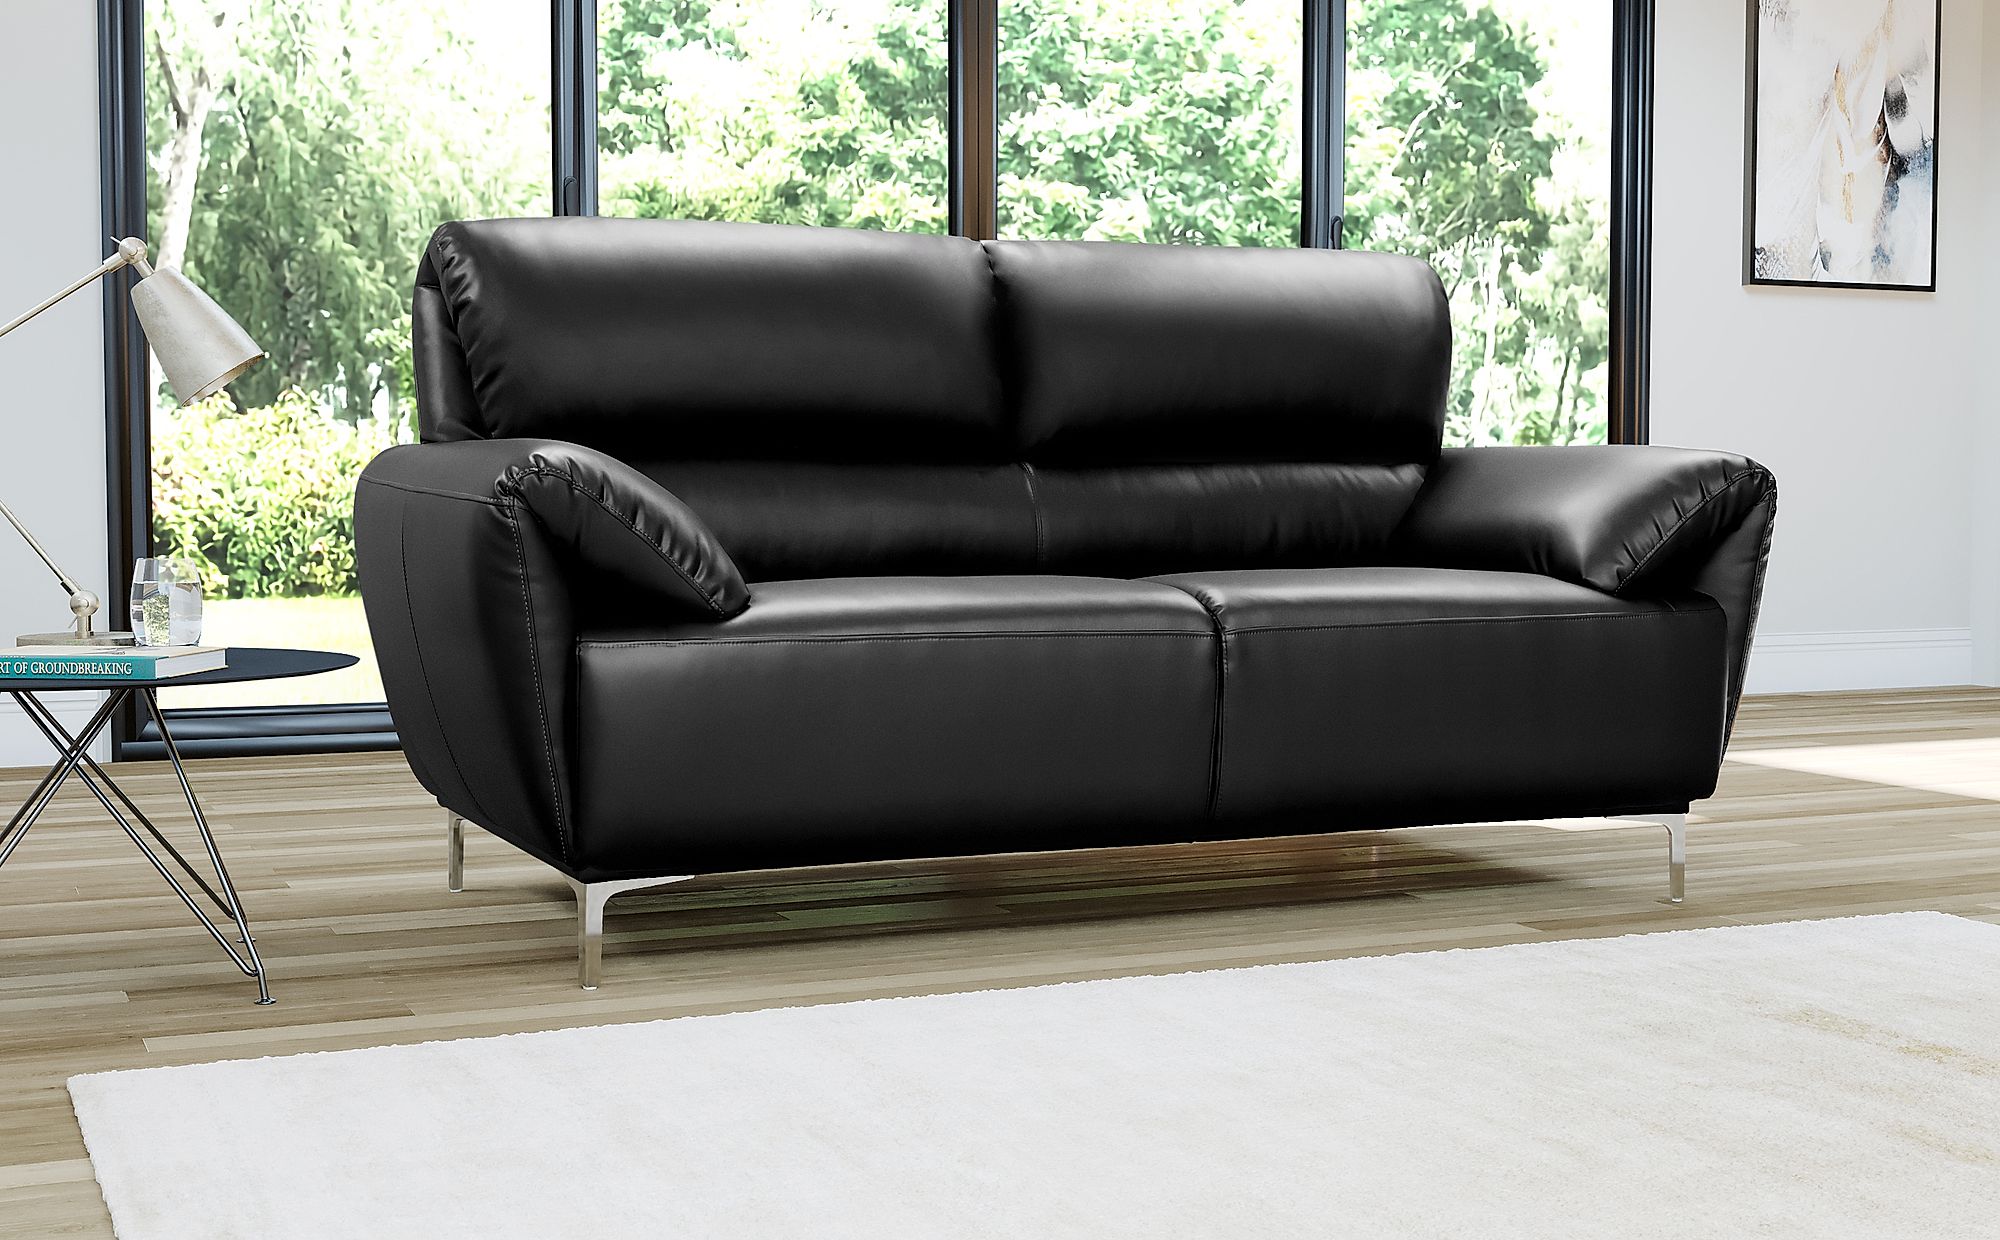 2 seater black leather sofa